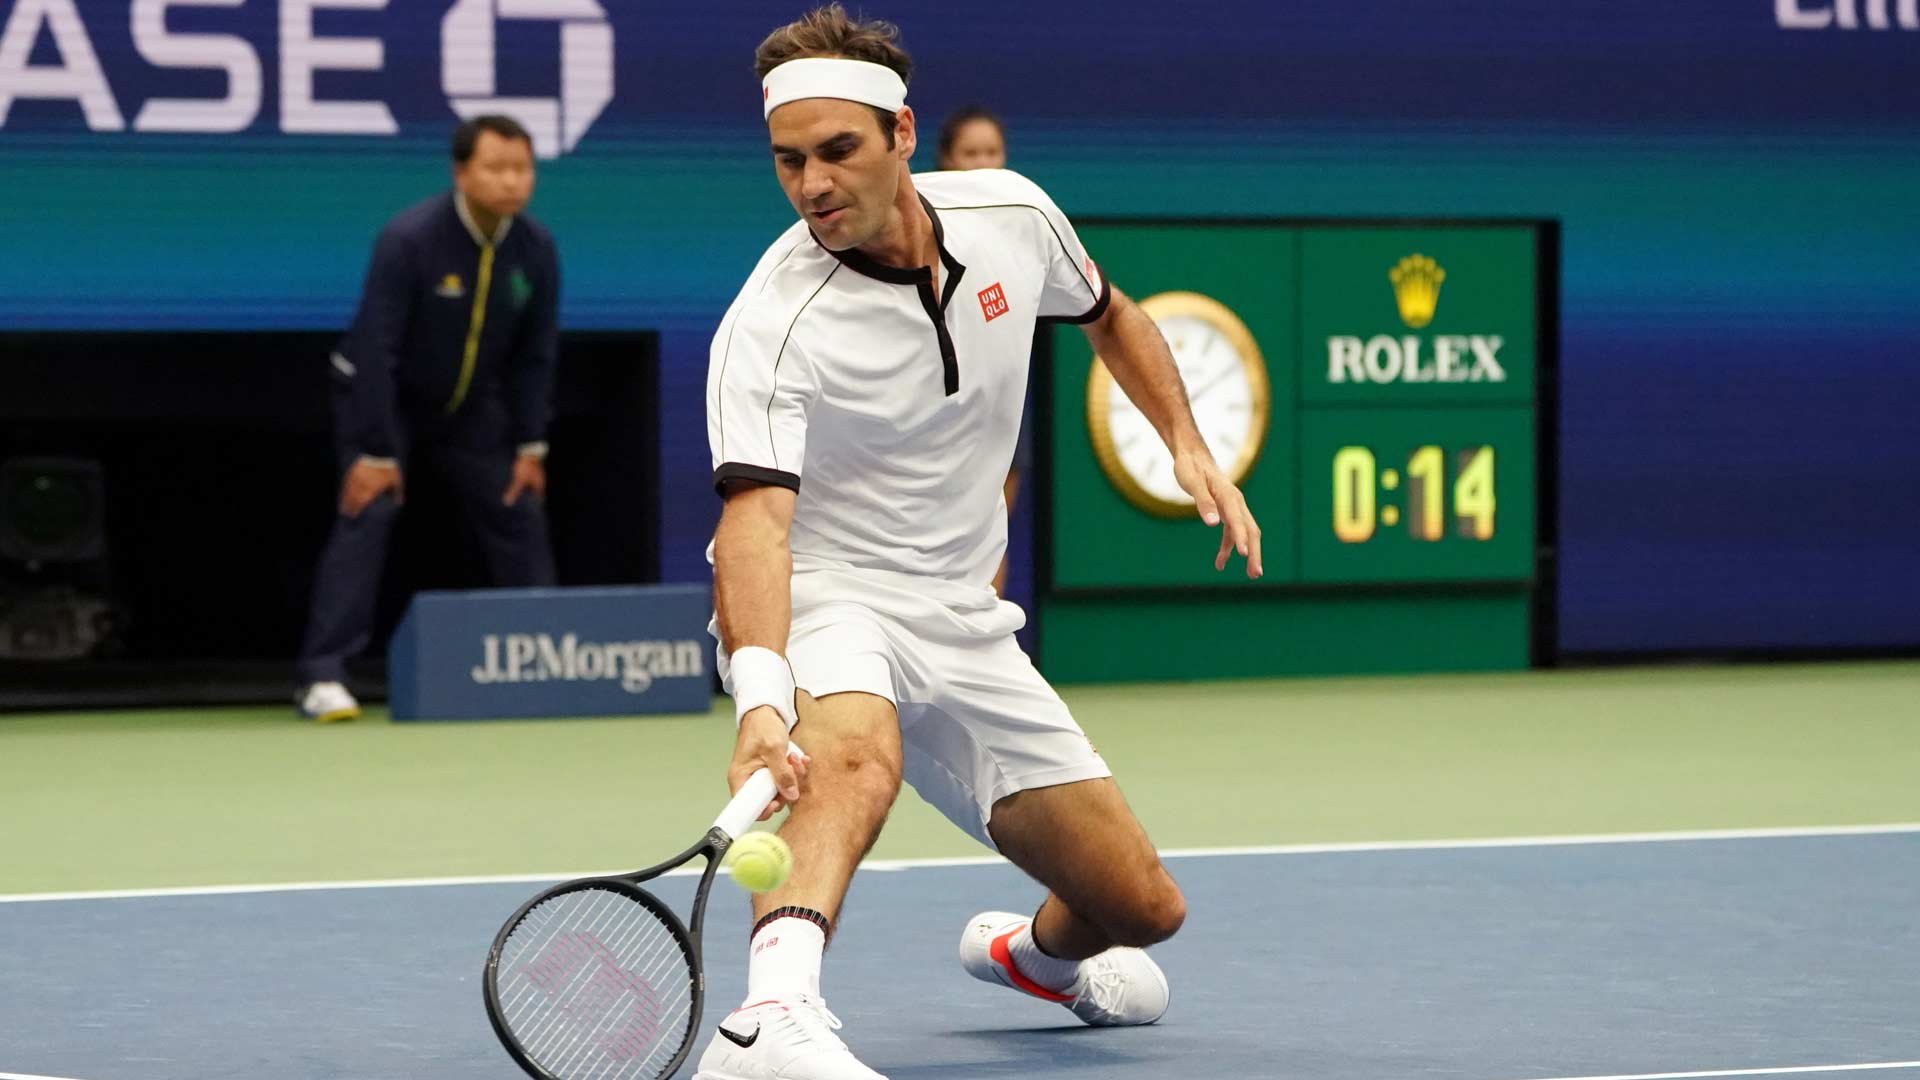 Roger Federer in the 2019 US Open